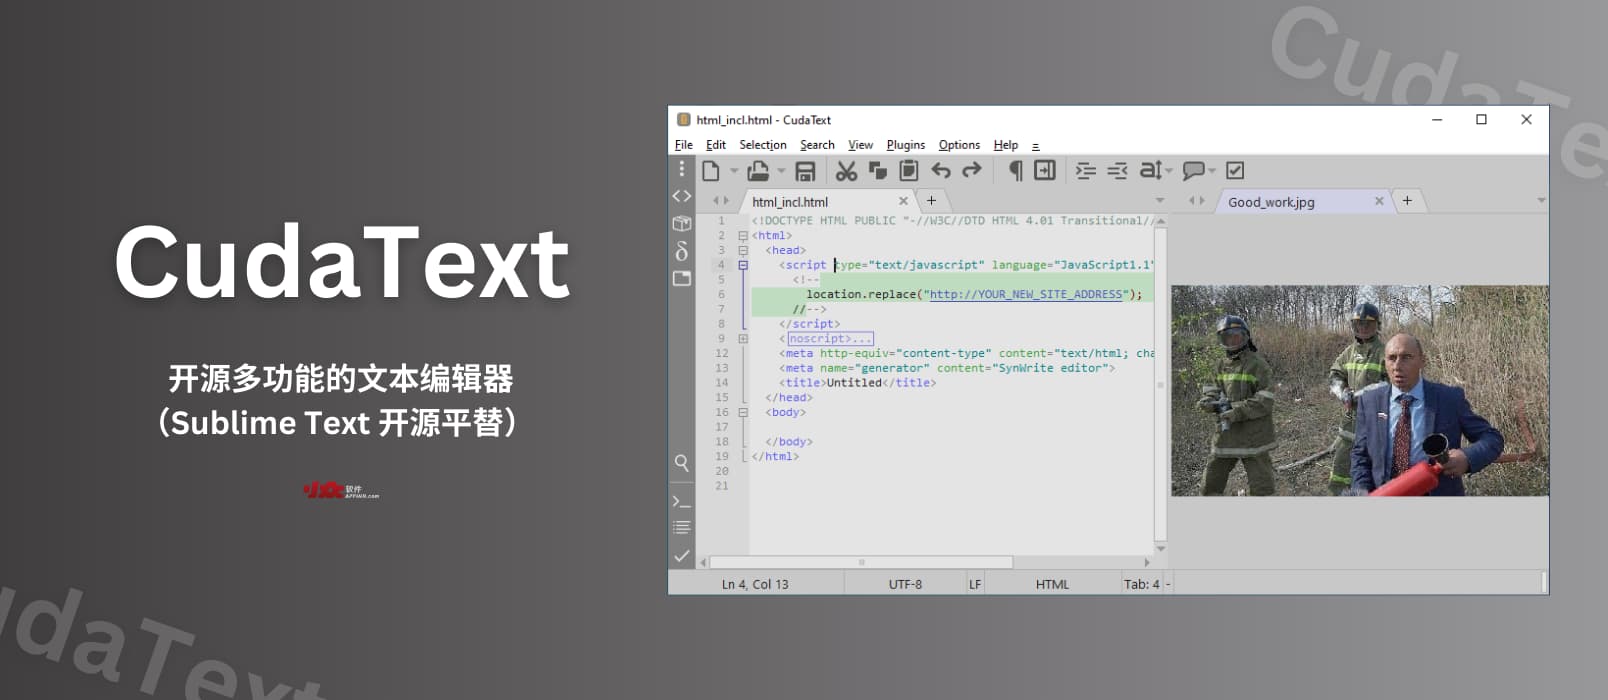 CudaText – 开源多功能的文本编辑器（Sublime Text 开源平替） 